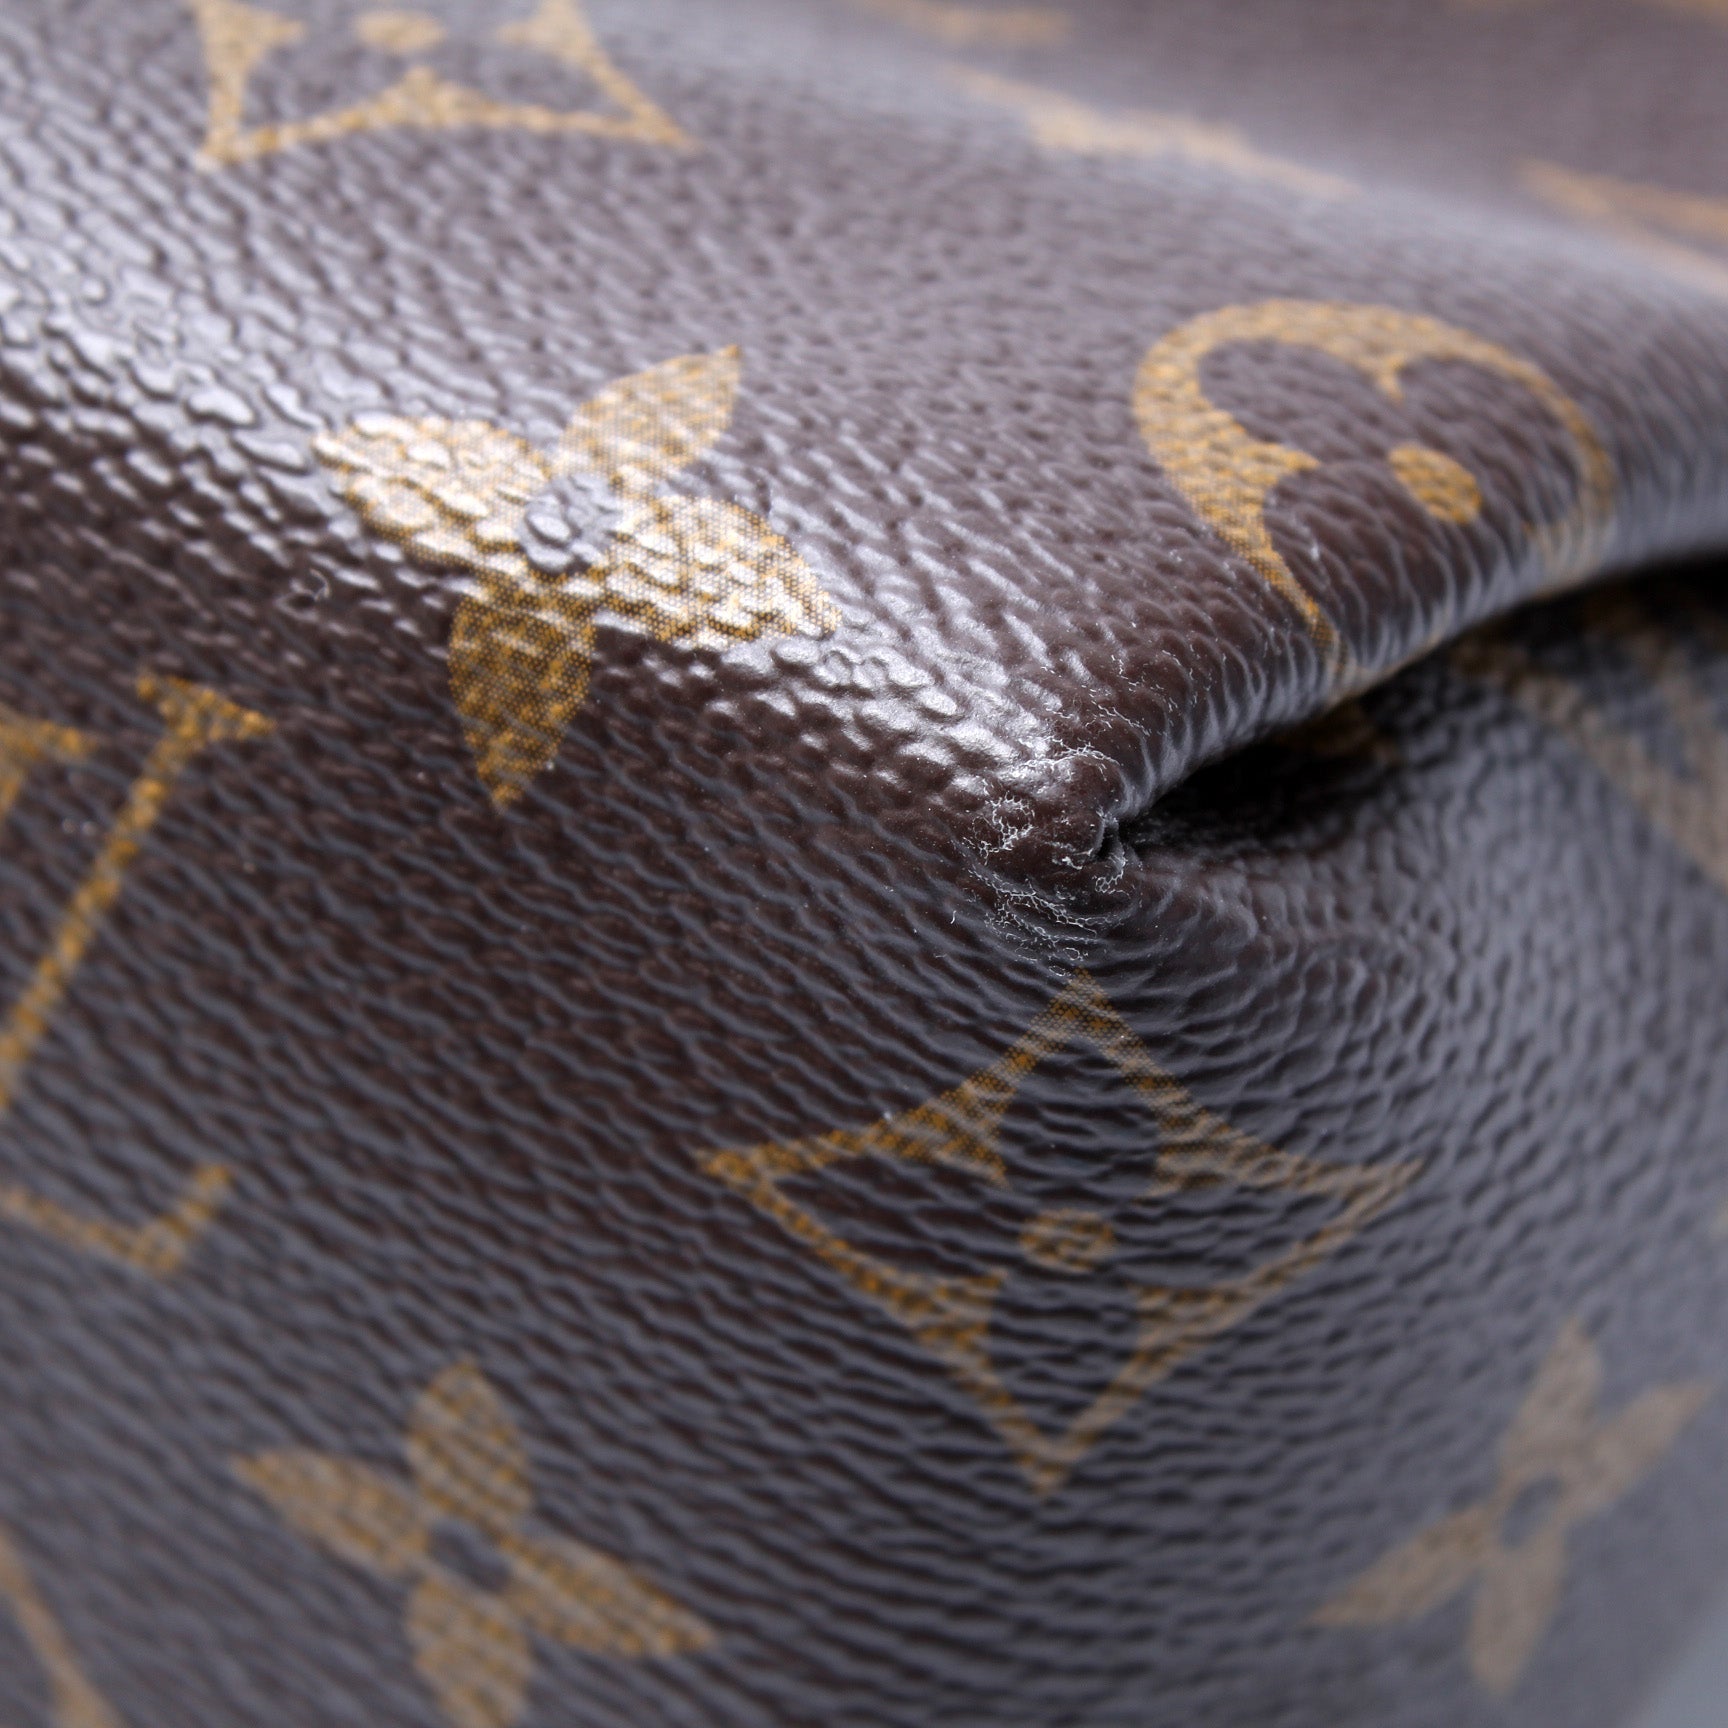 Pallas Beauty Case – Keeks Designer Handbags